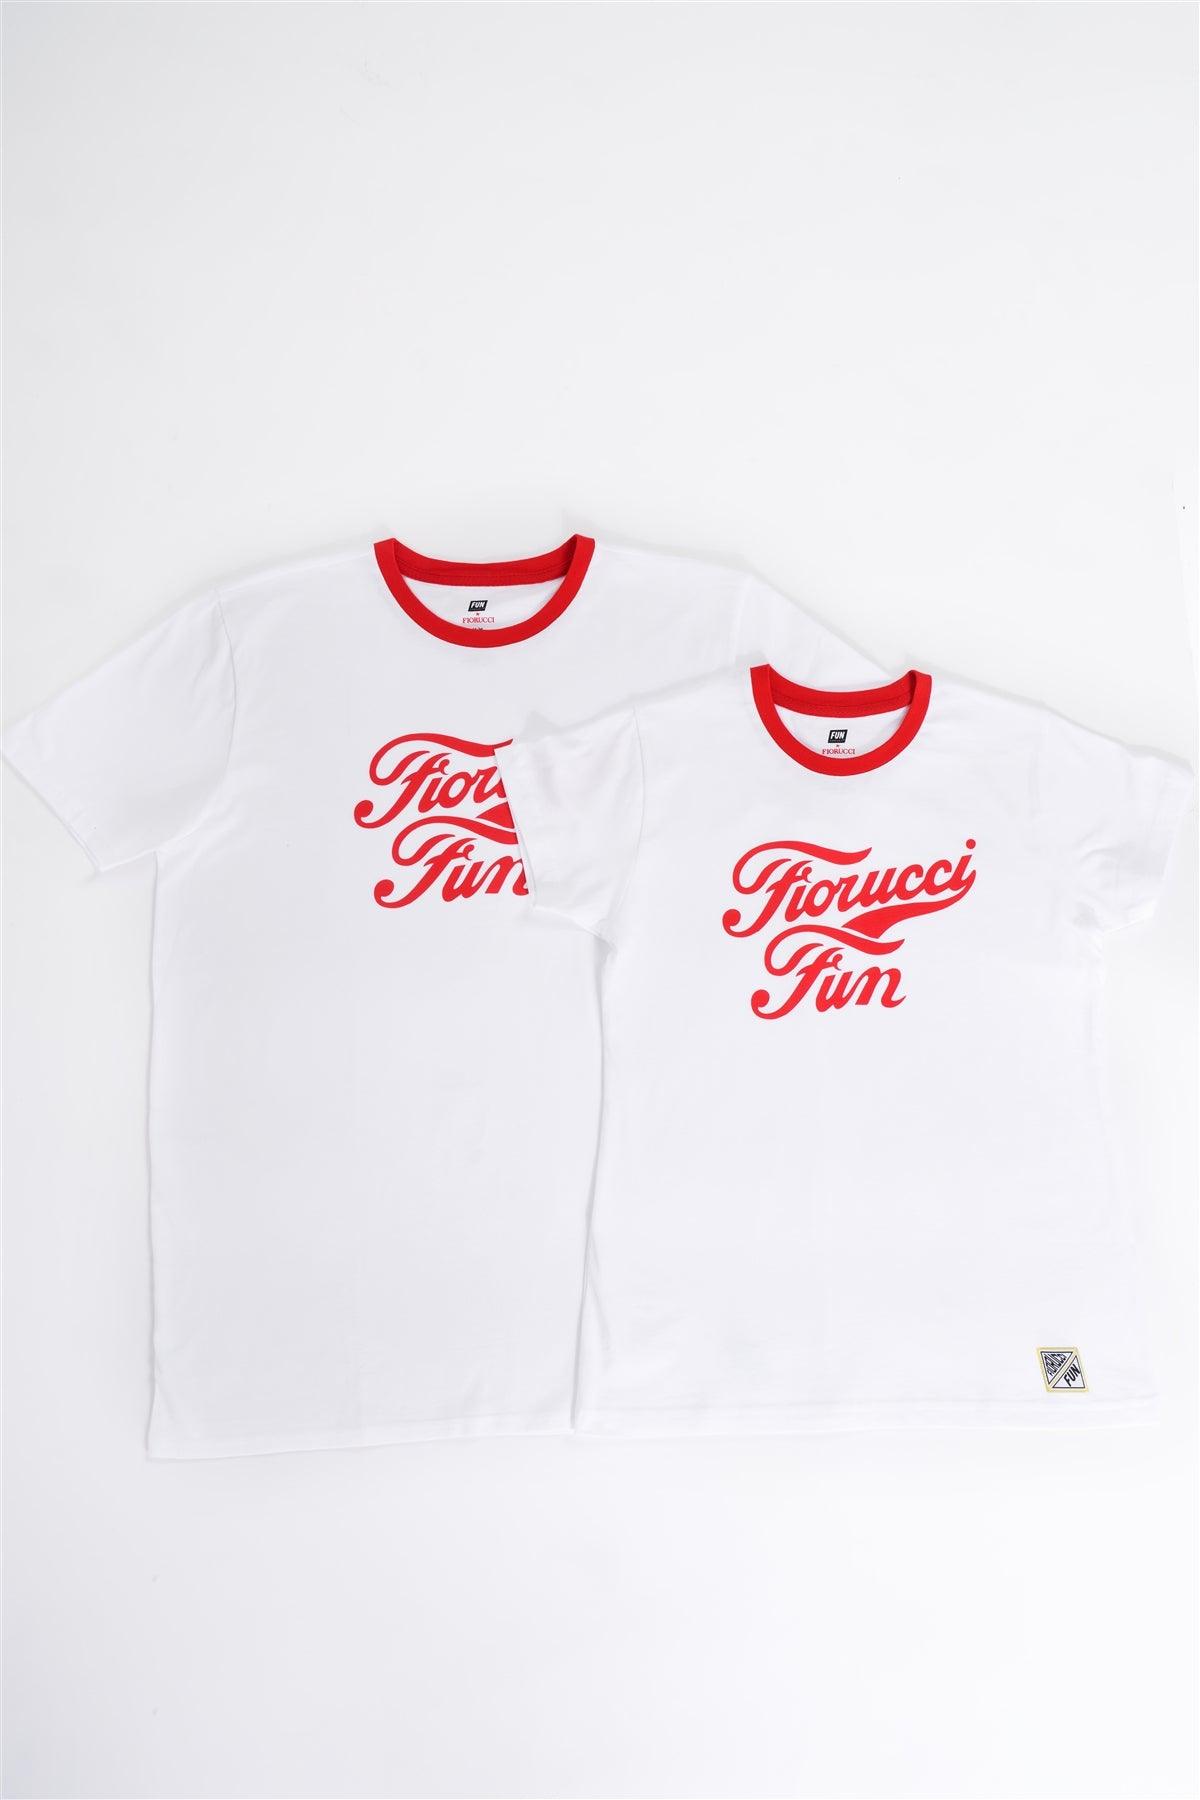 Fiorucci Fun Men's White & Red Printed Logo T-Shirt For Him